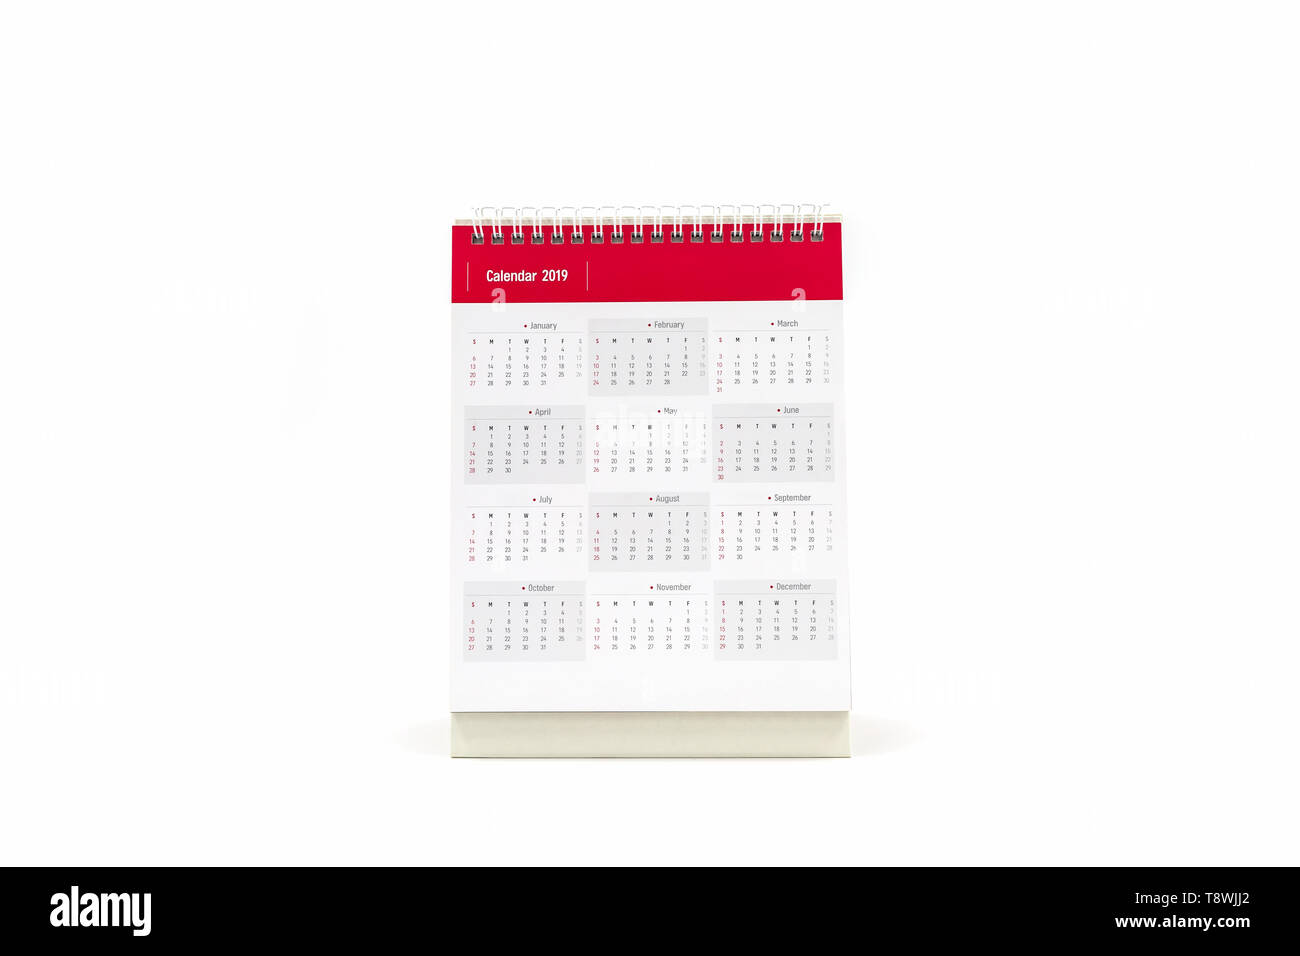 White paper desk spiral calendar 2019 isolated on white background. Stock Photo